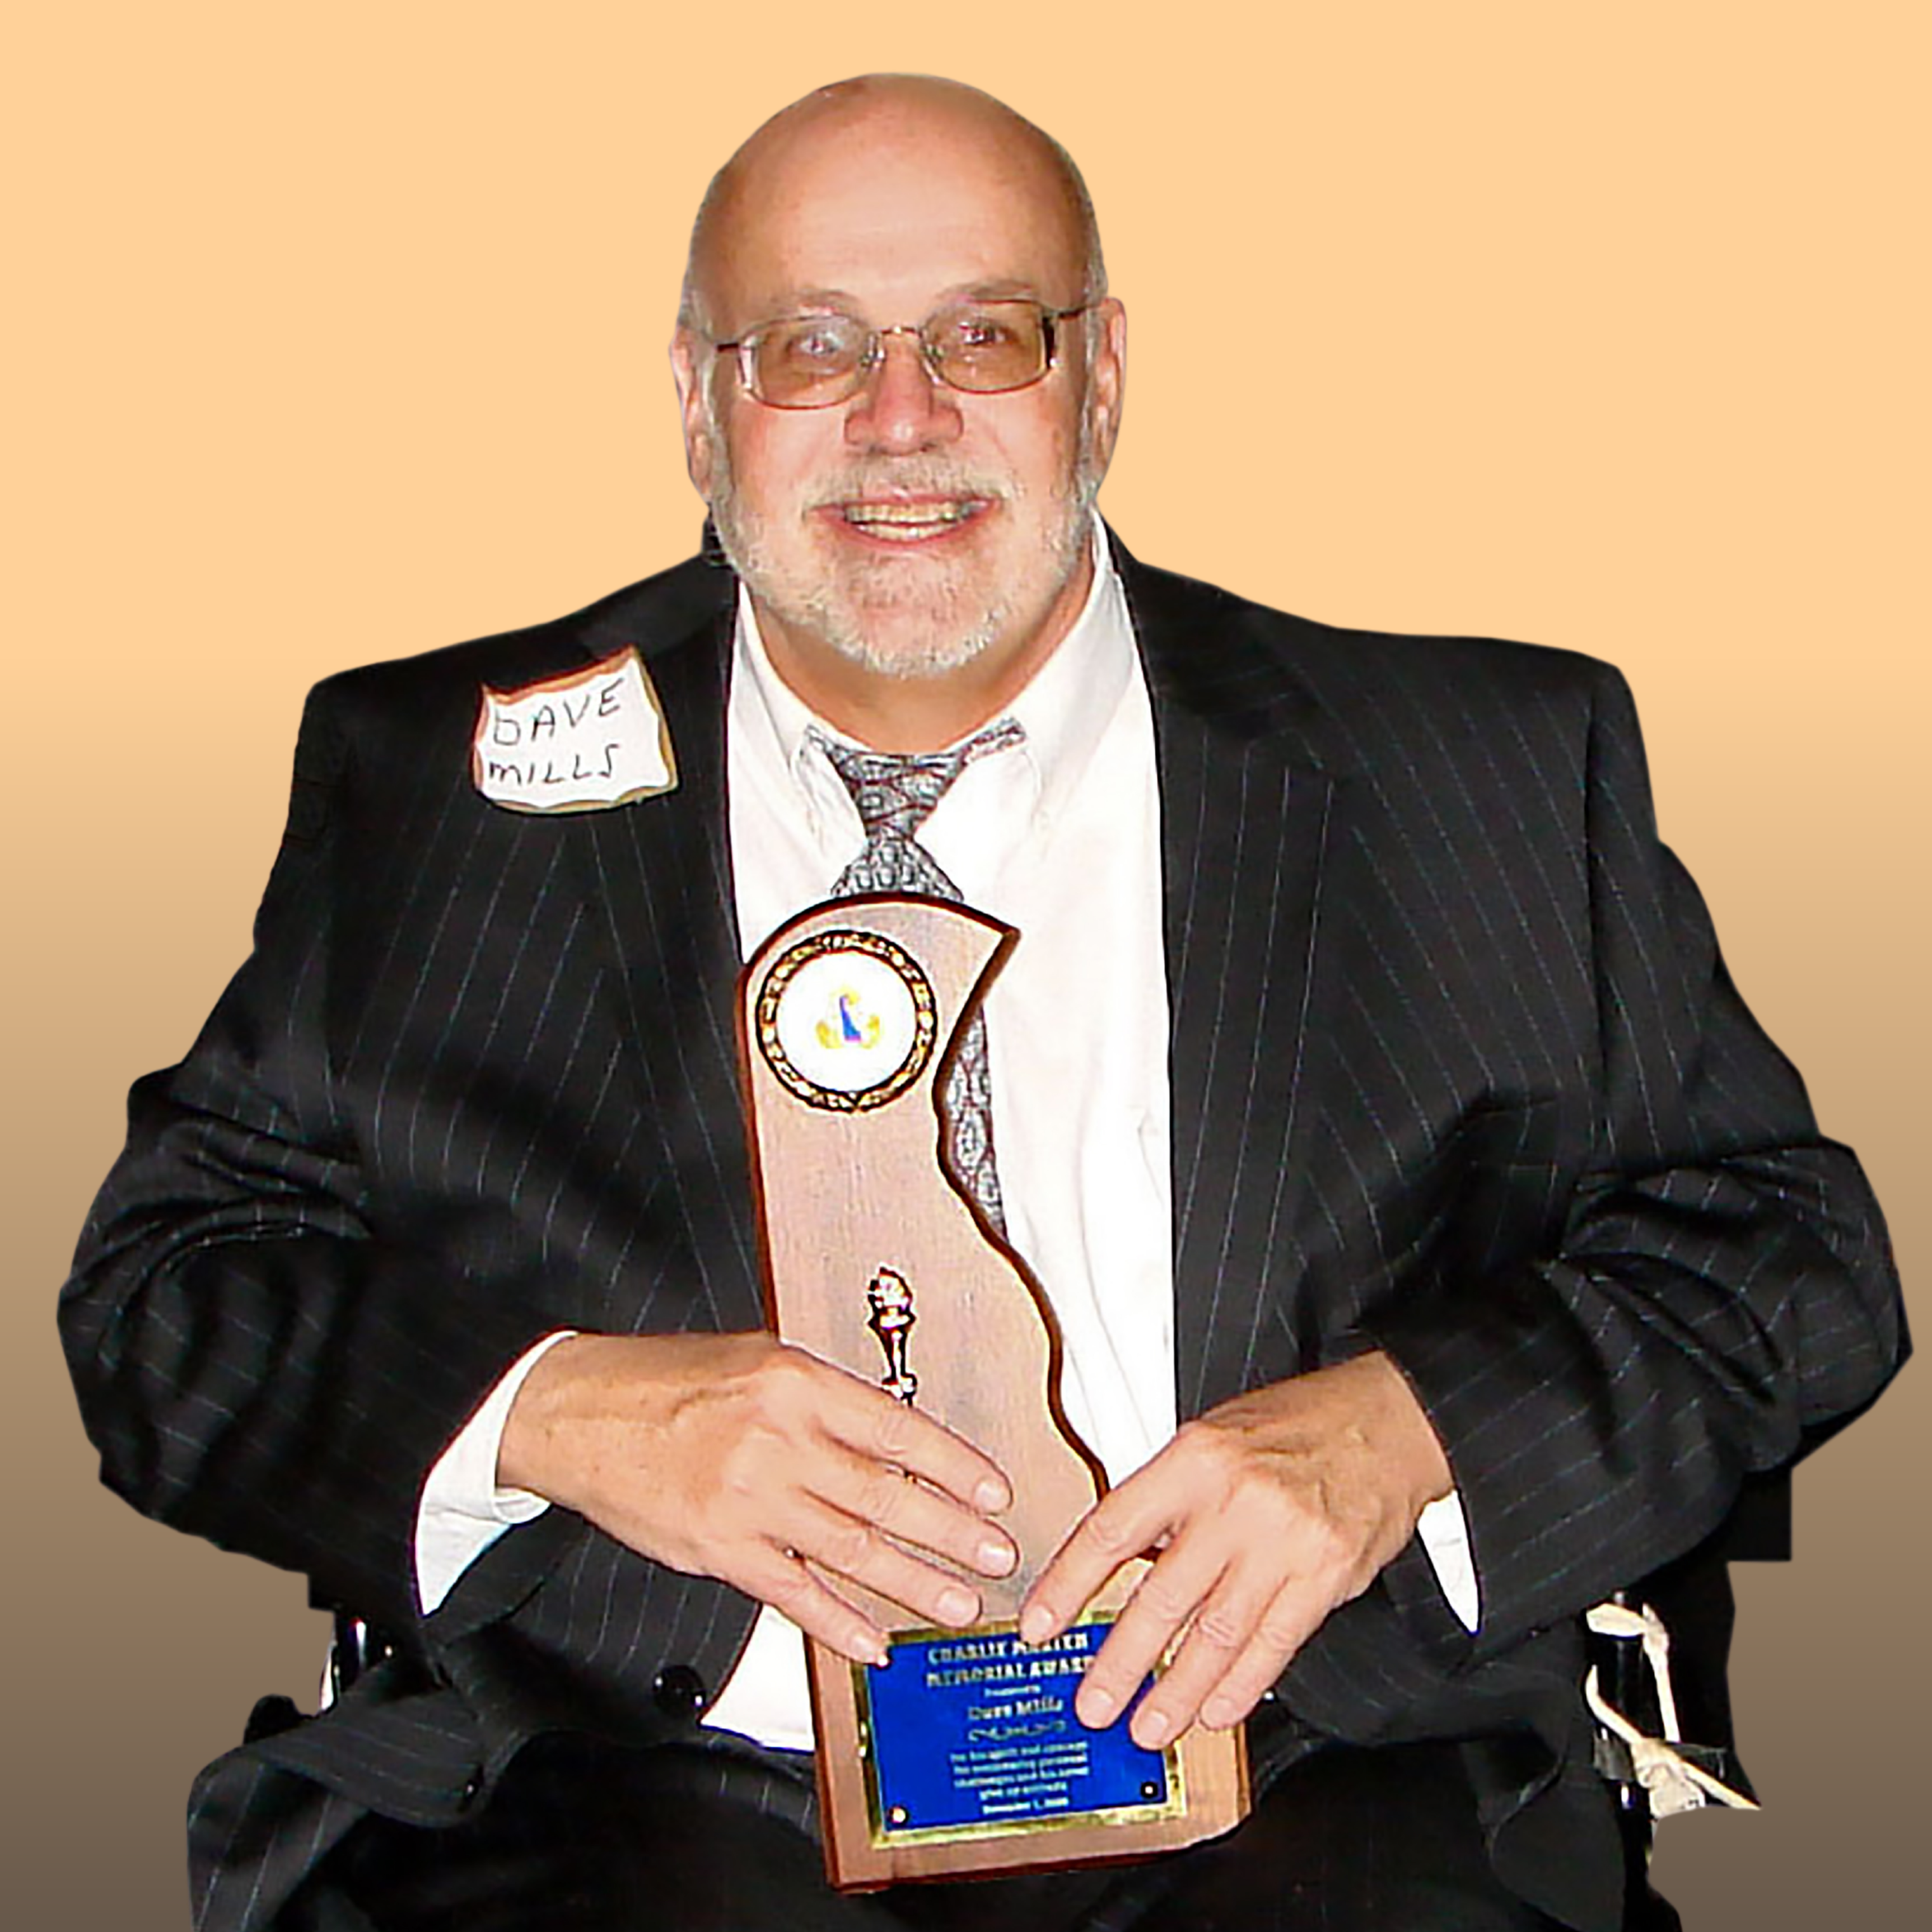 David Mills holds an award smiling